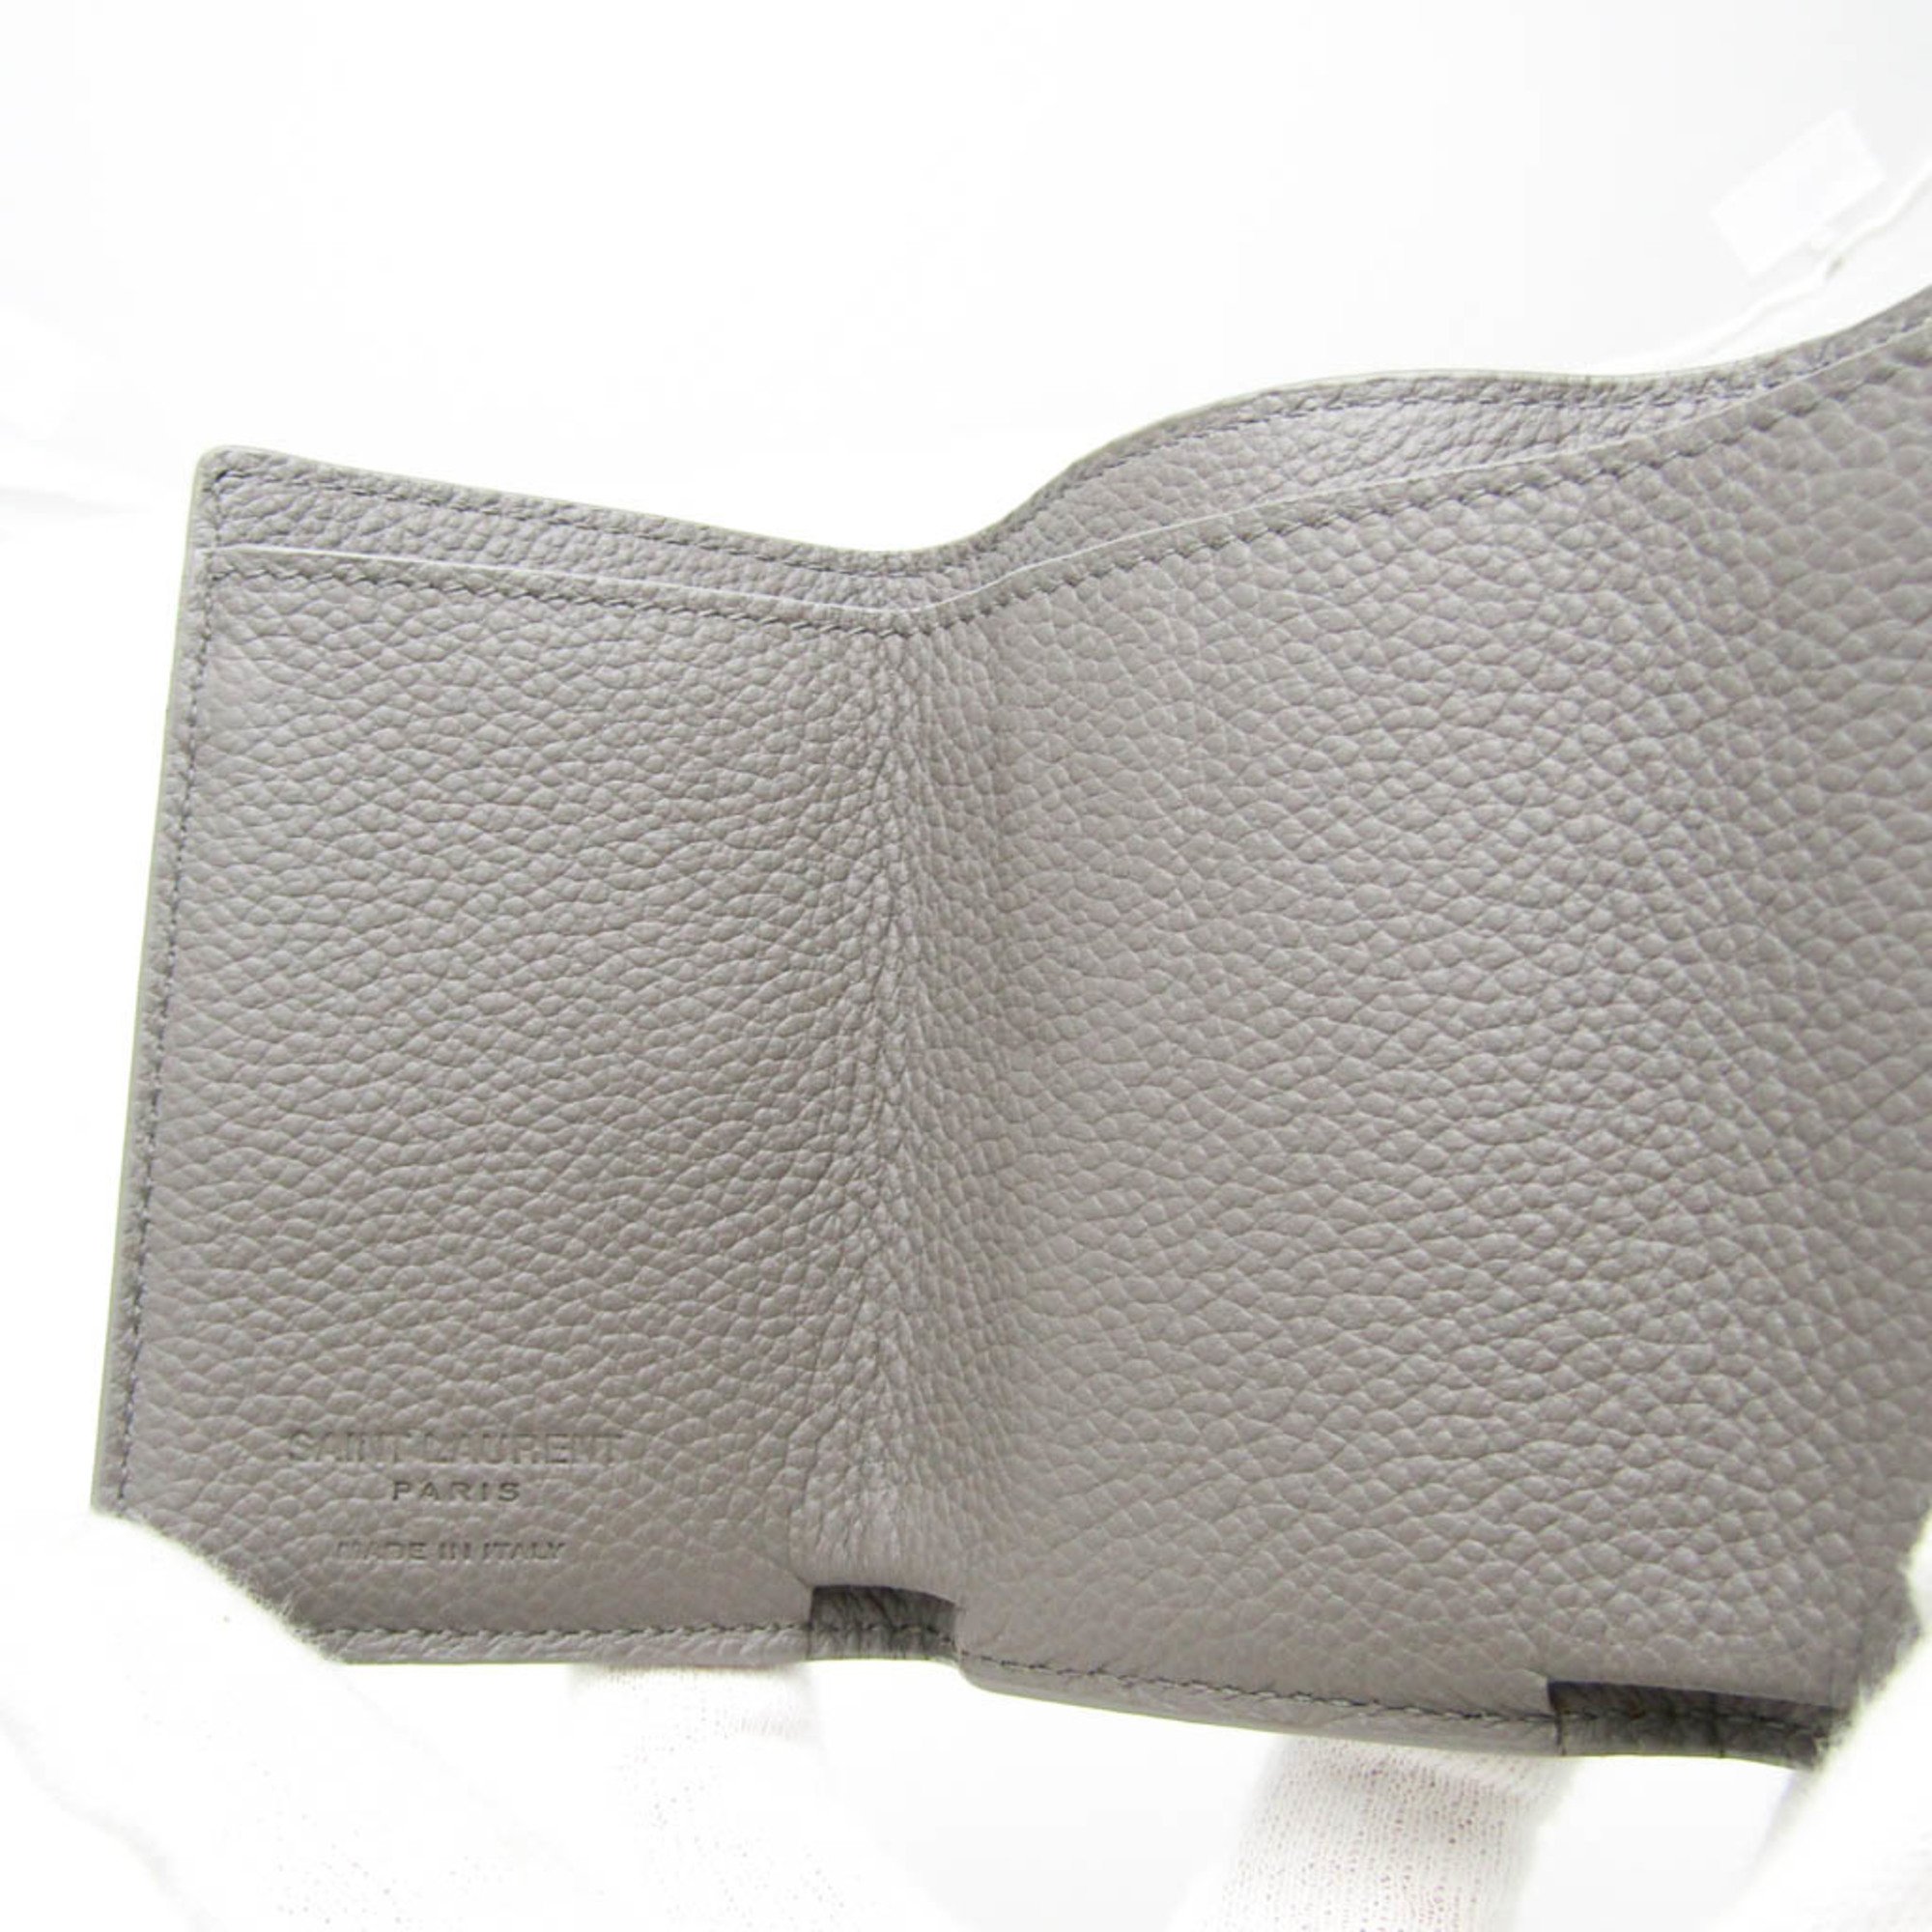 Saint Laurent Tiny Wallet 459784 Women,Men Leather Wallet (tri-fold) Gray